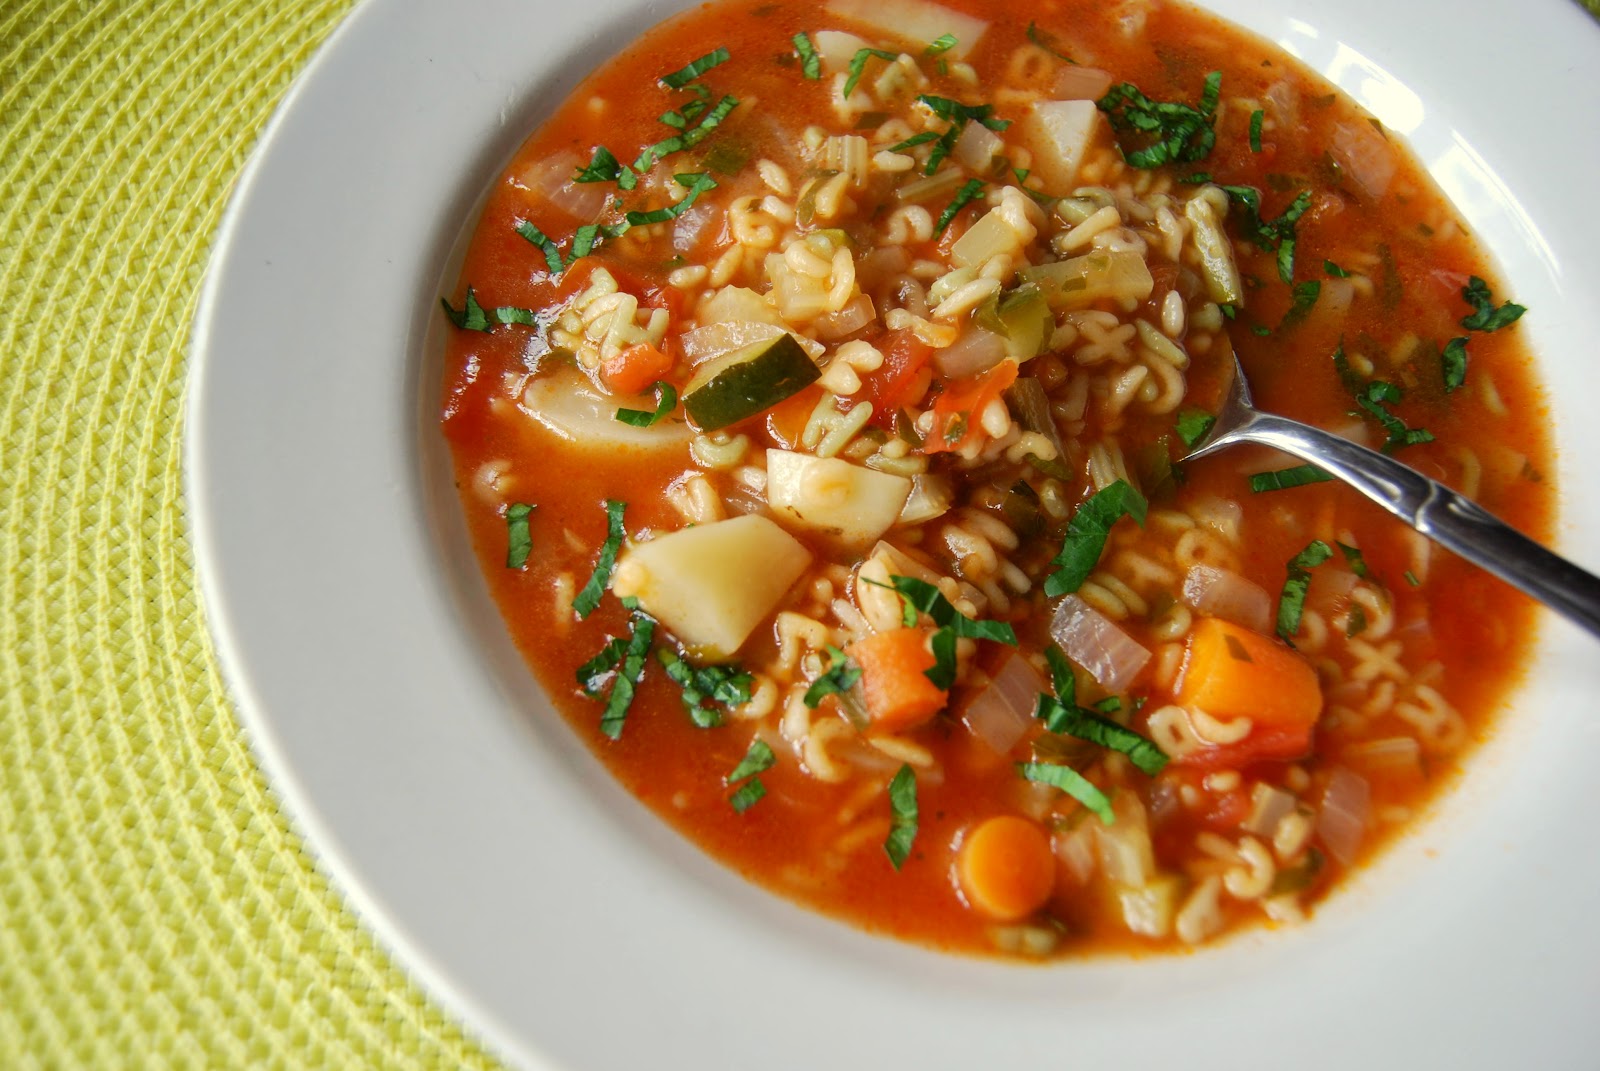 Kirsten's Kitchen: of vegan creations: Alphabet soup